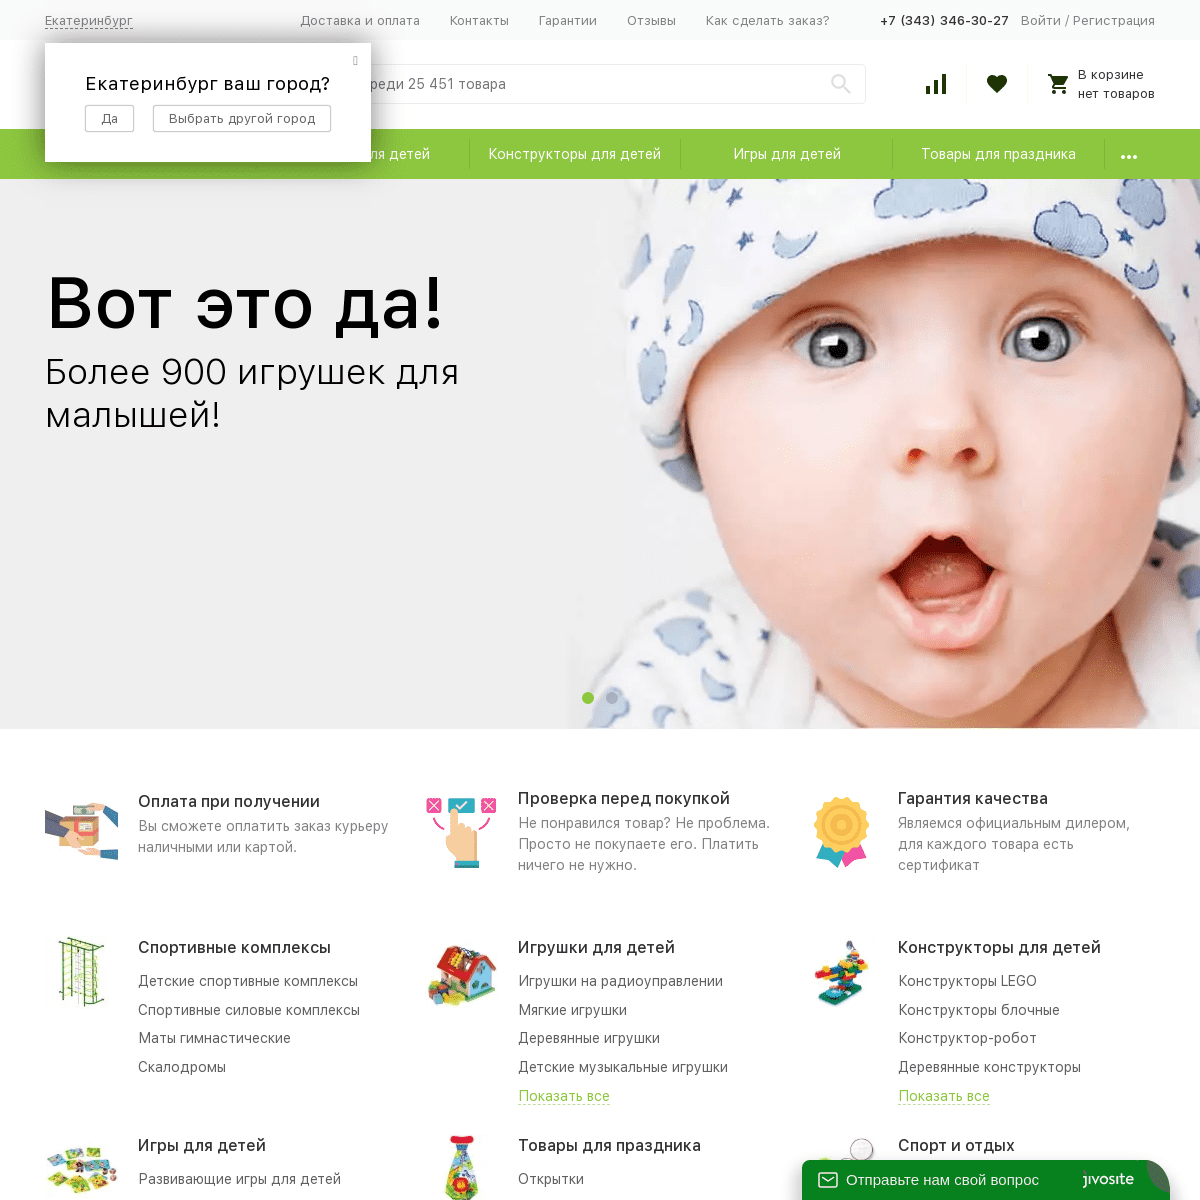 A complete backup of terra-baby.ru